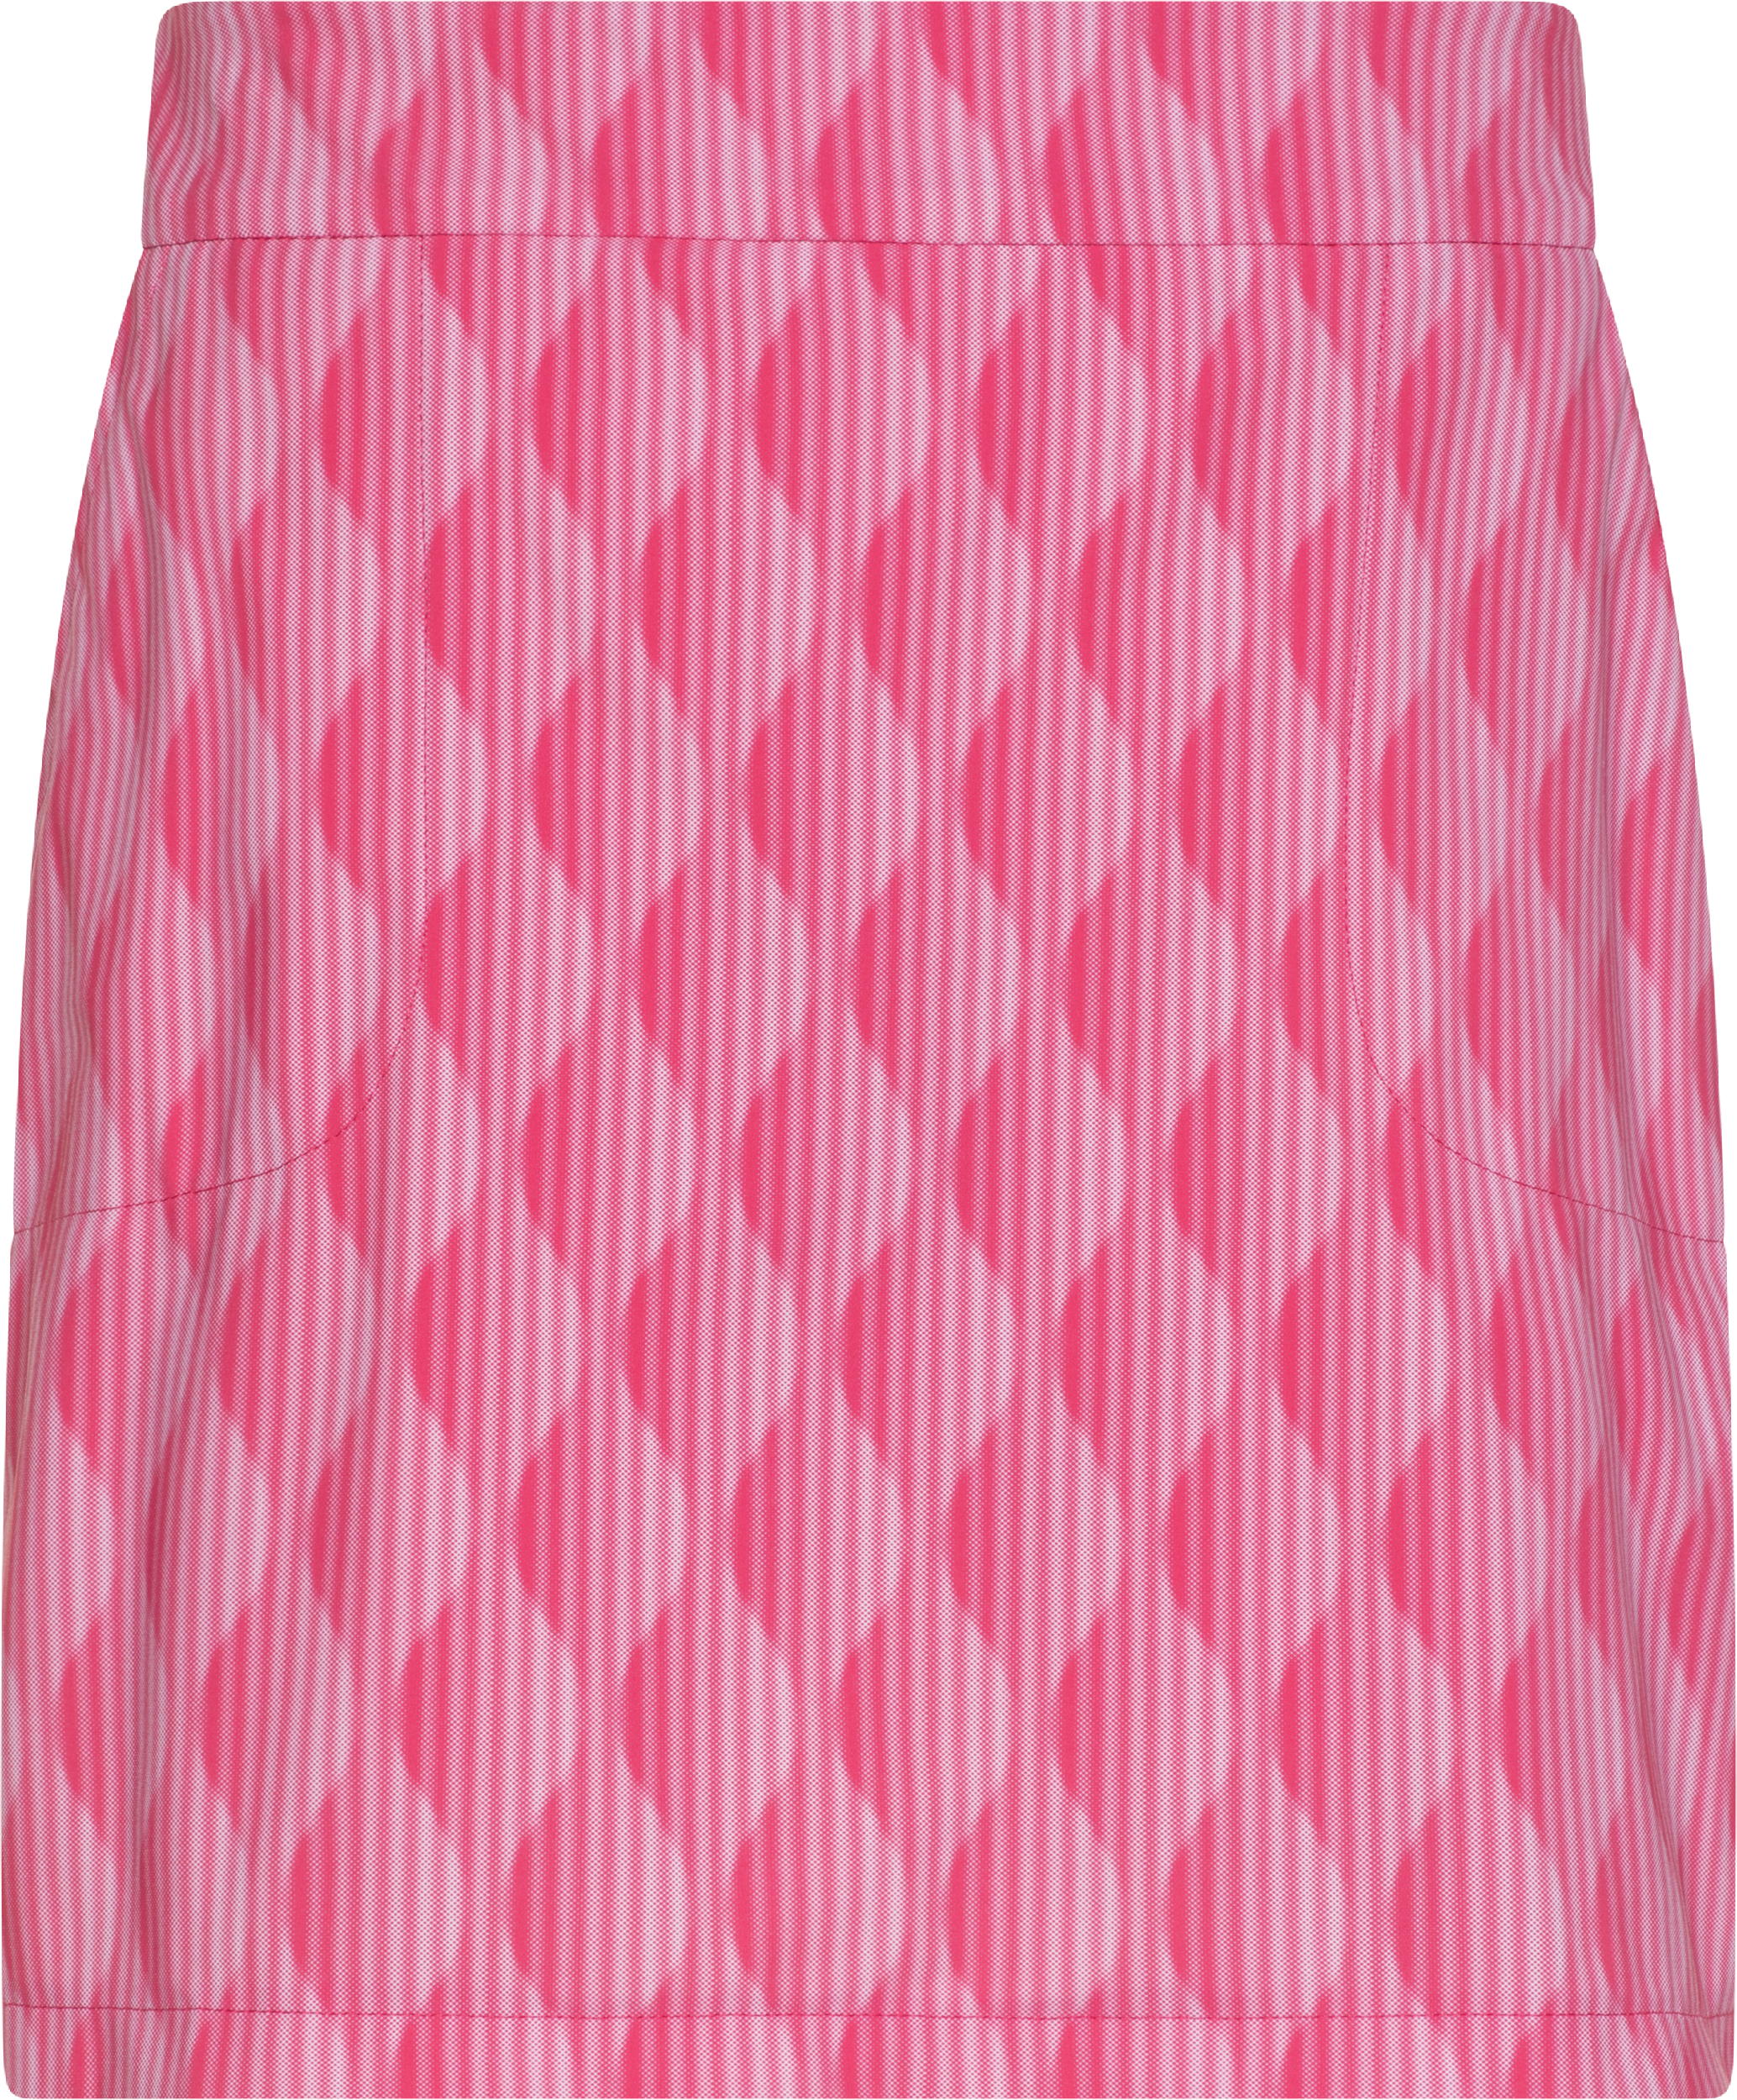 Alberto LISSY 3D-Jersey Print Skirt, pink/white